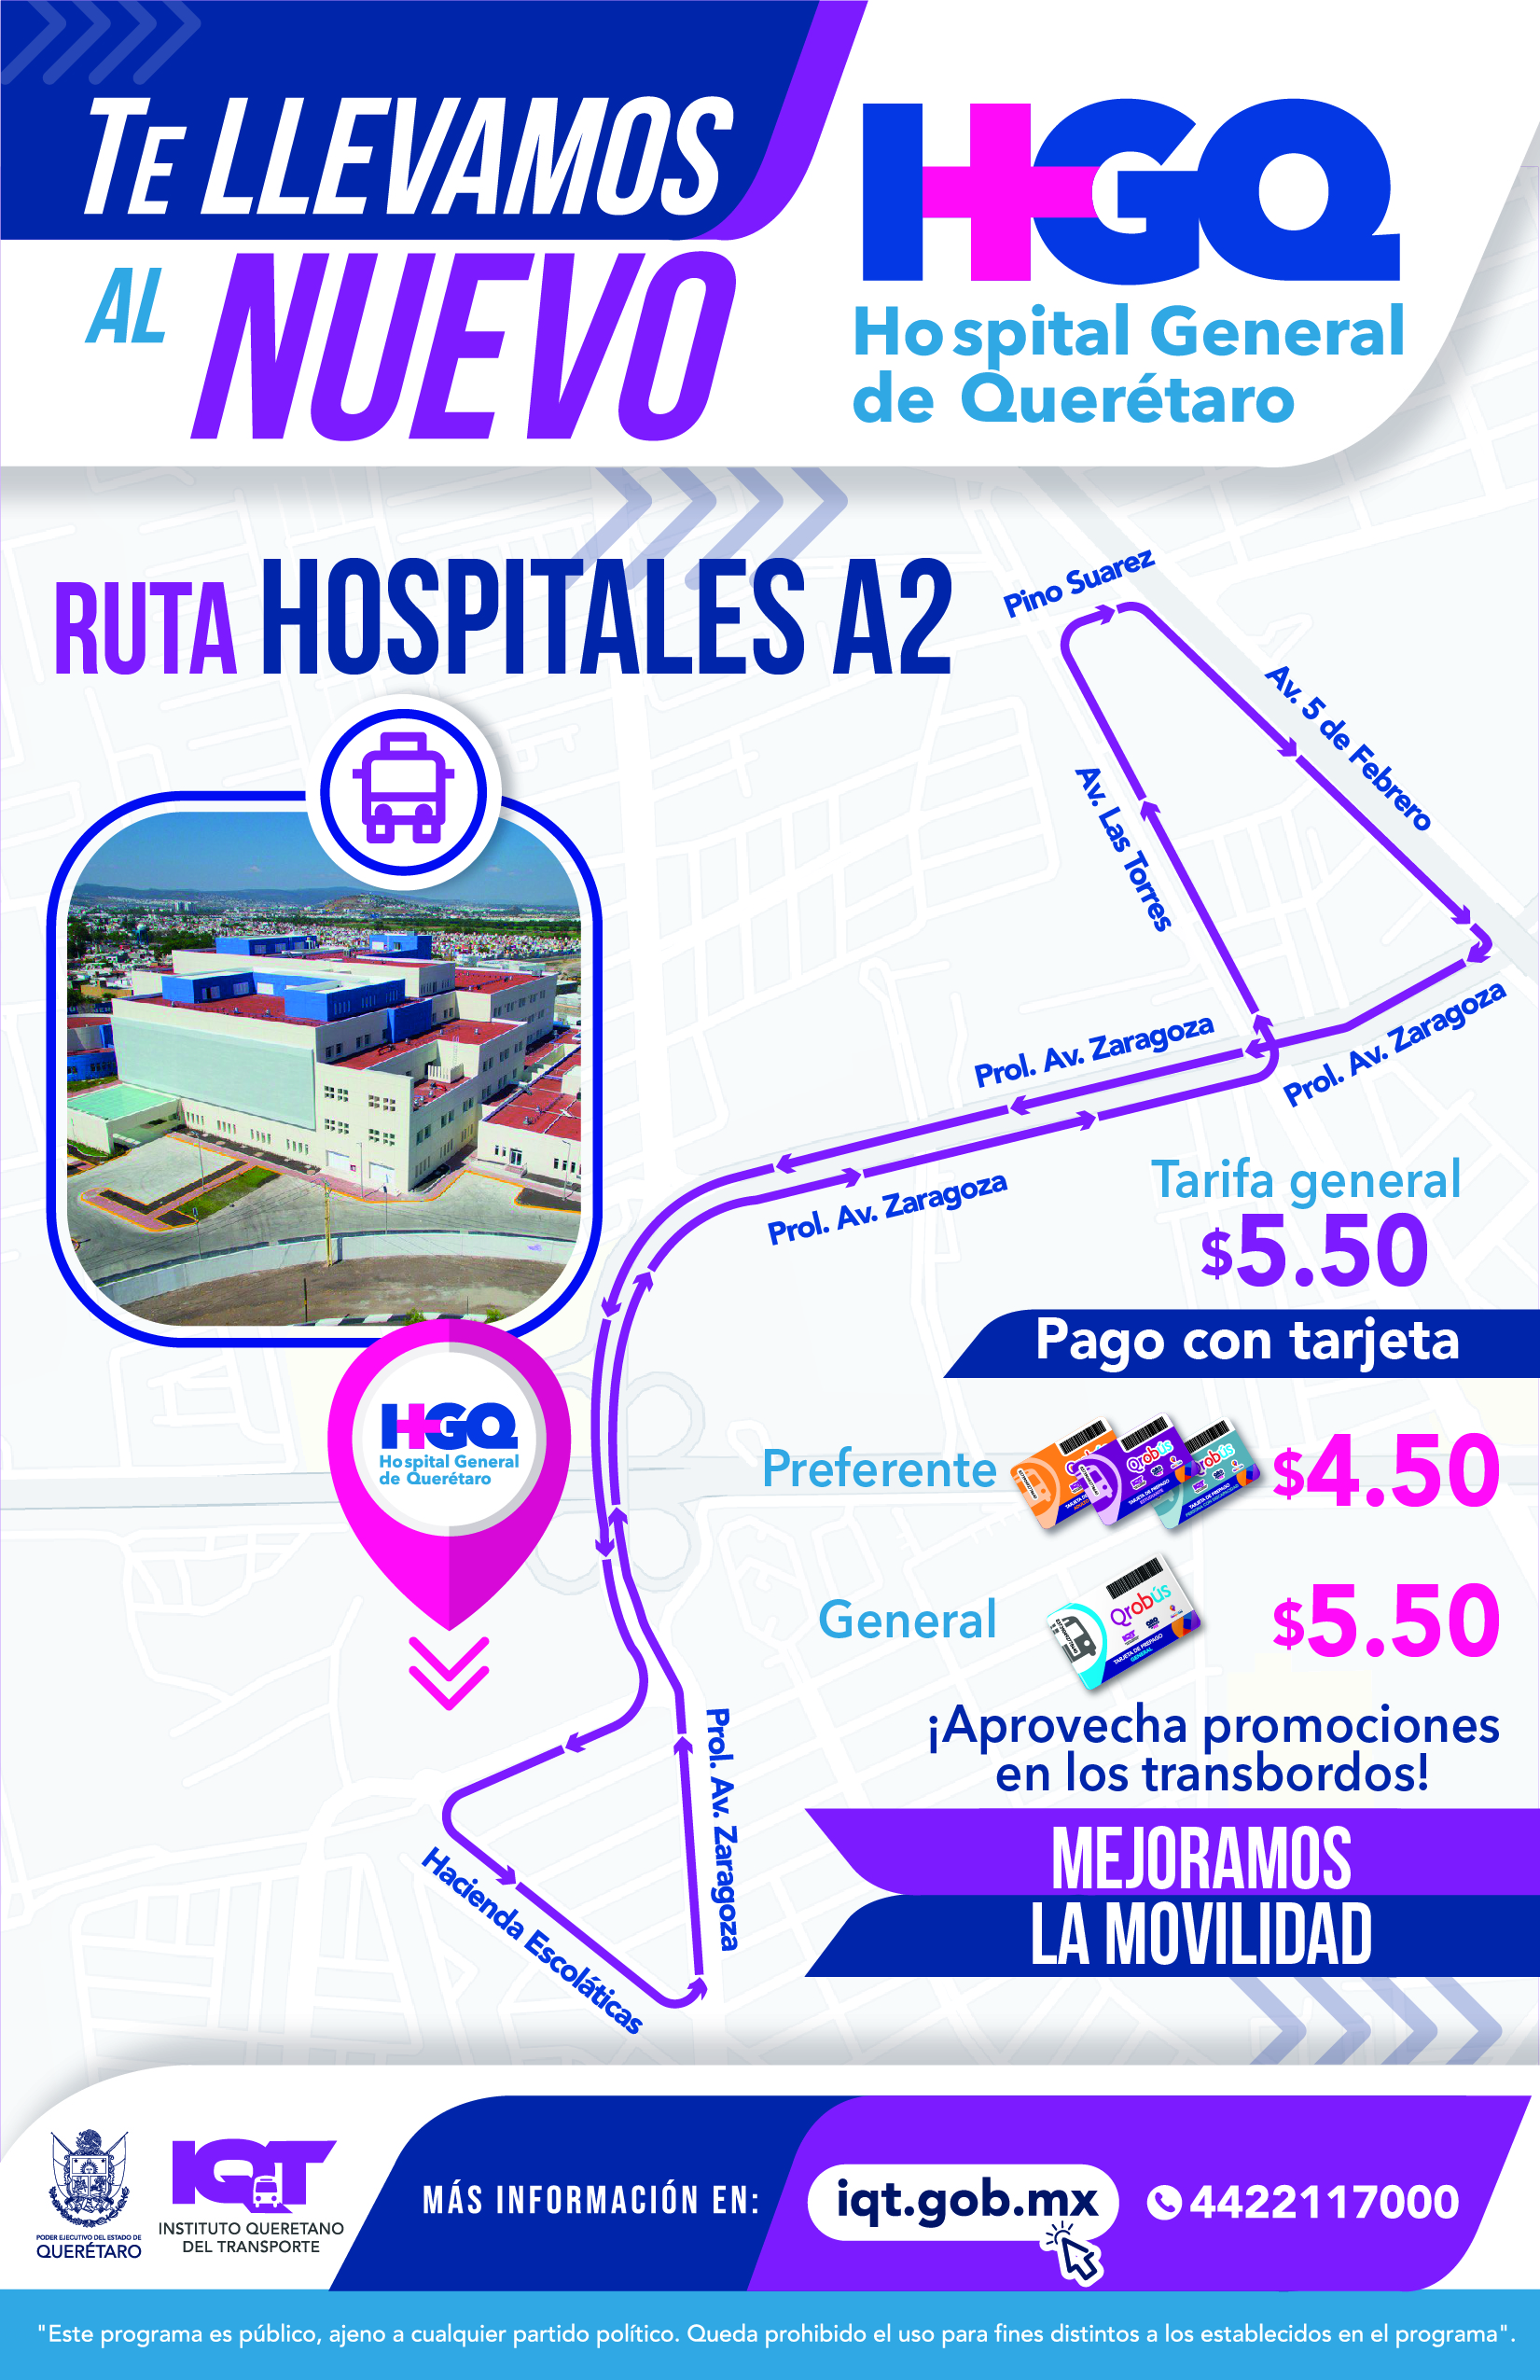 A partir de hoy, 1 de marzo, la Ruta Hospitales te acerca al Nuevo Hospital General de Querétaro